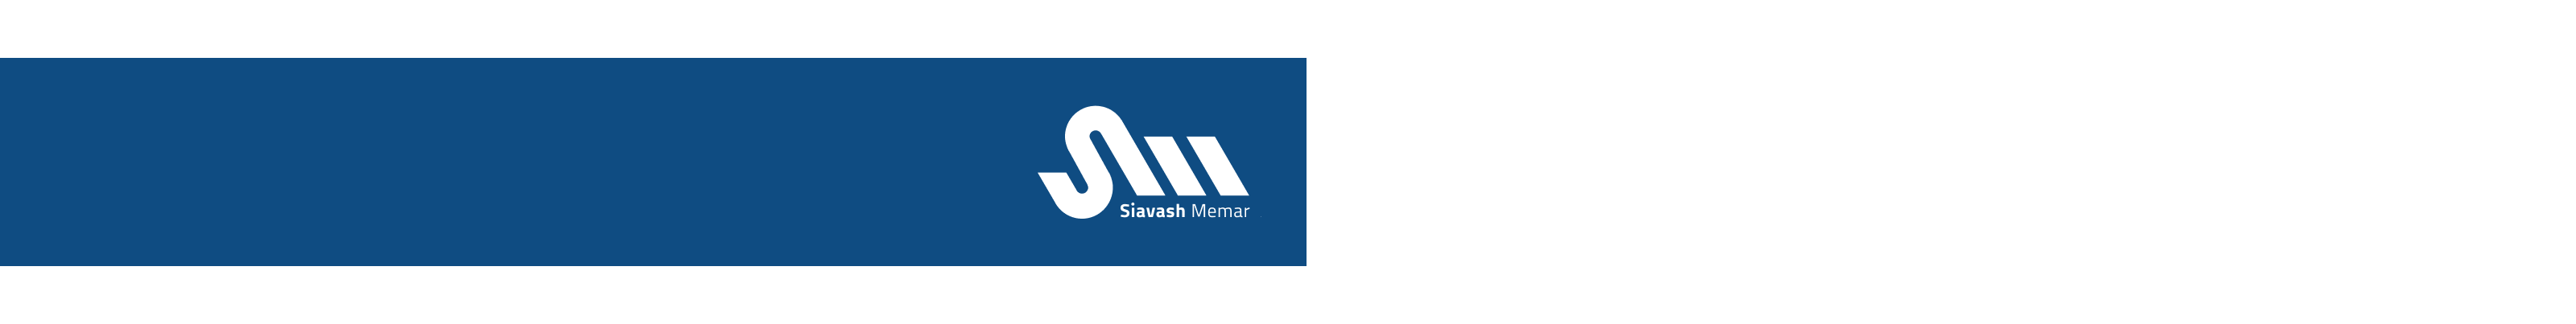 Siavash Memar's profile banner